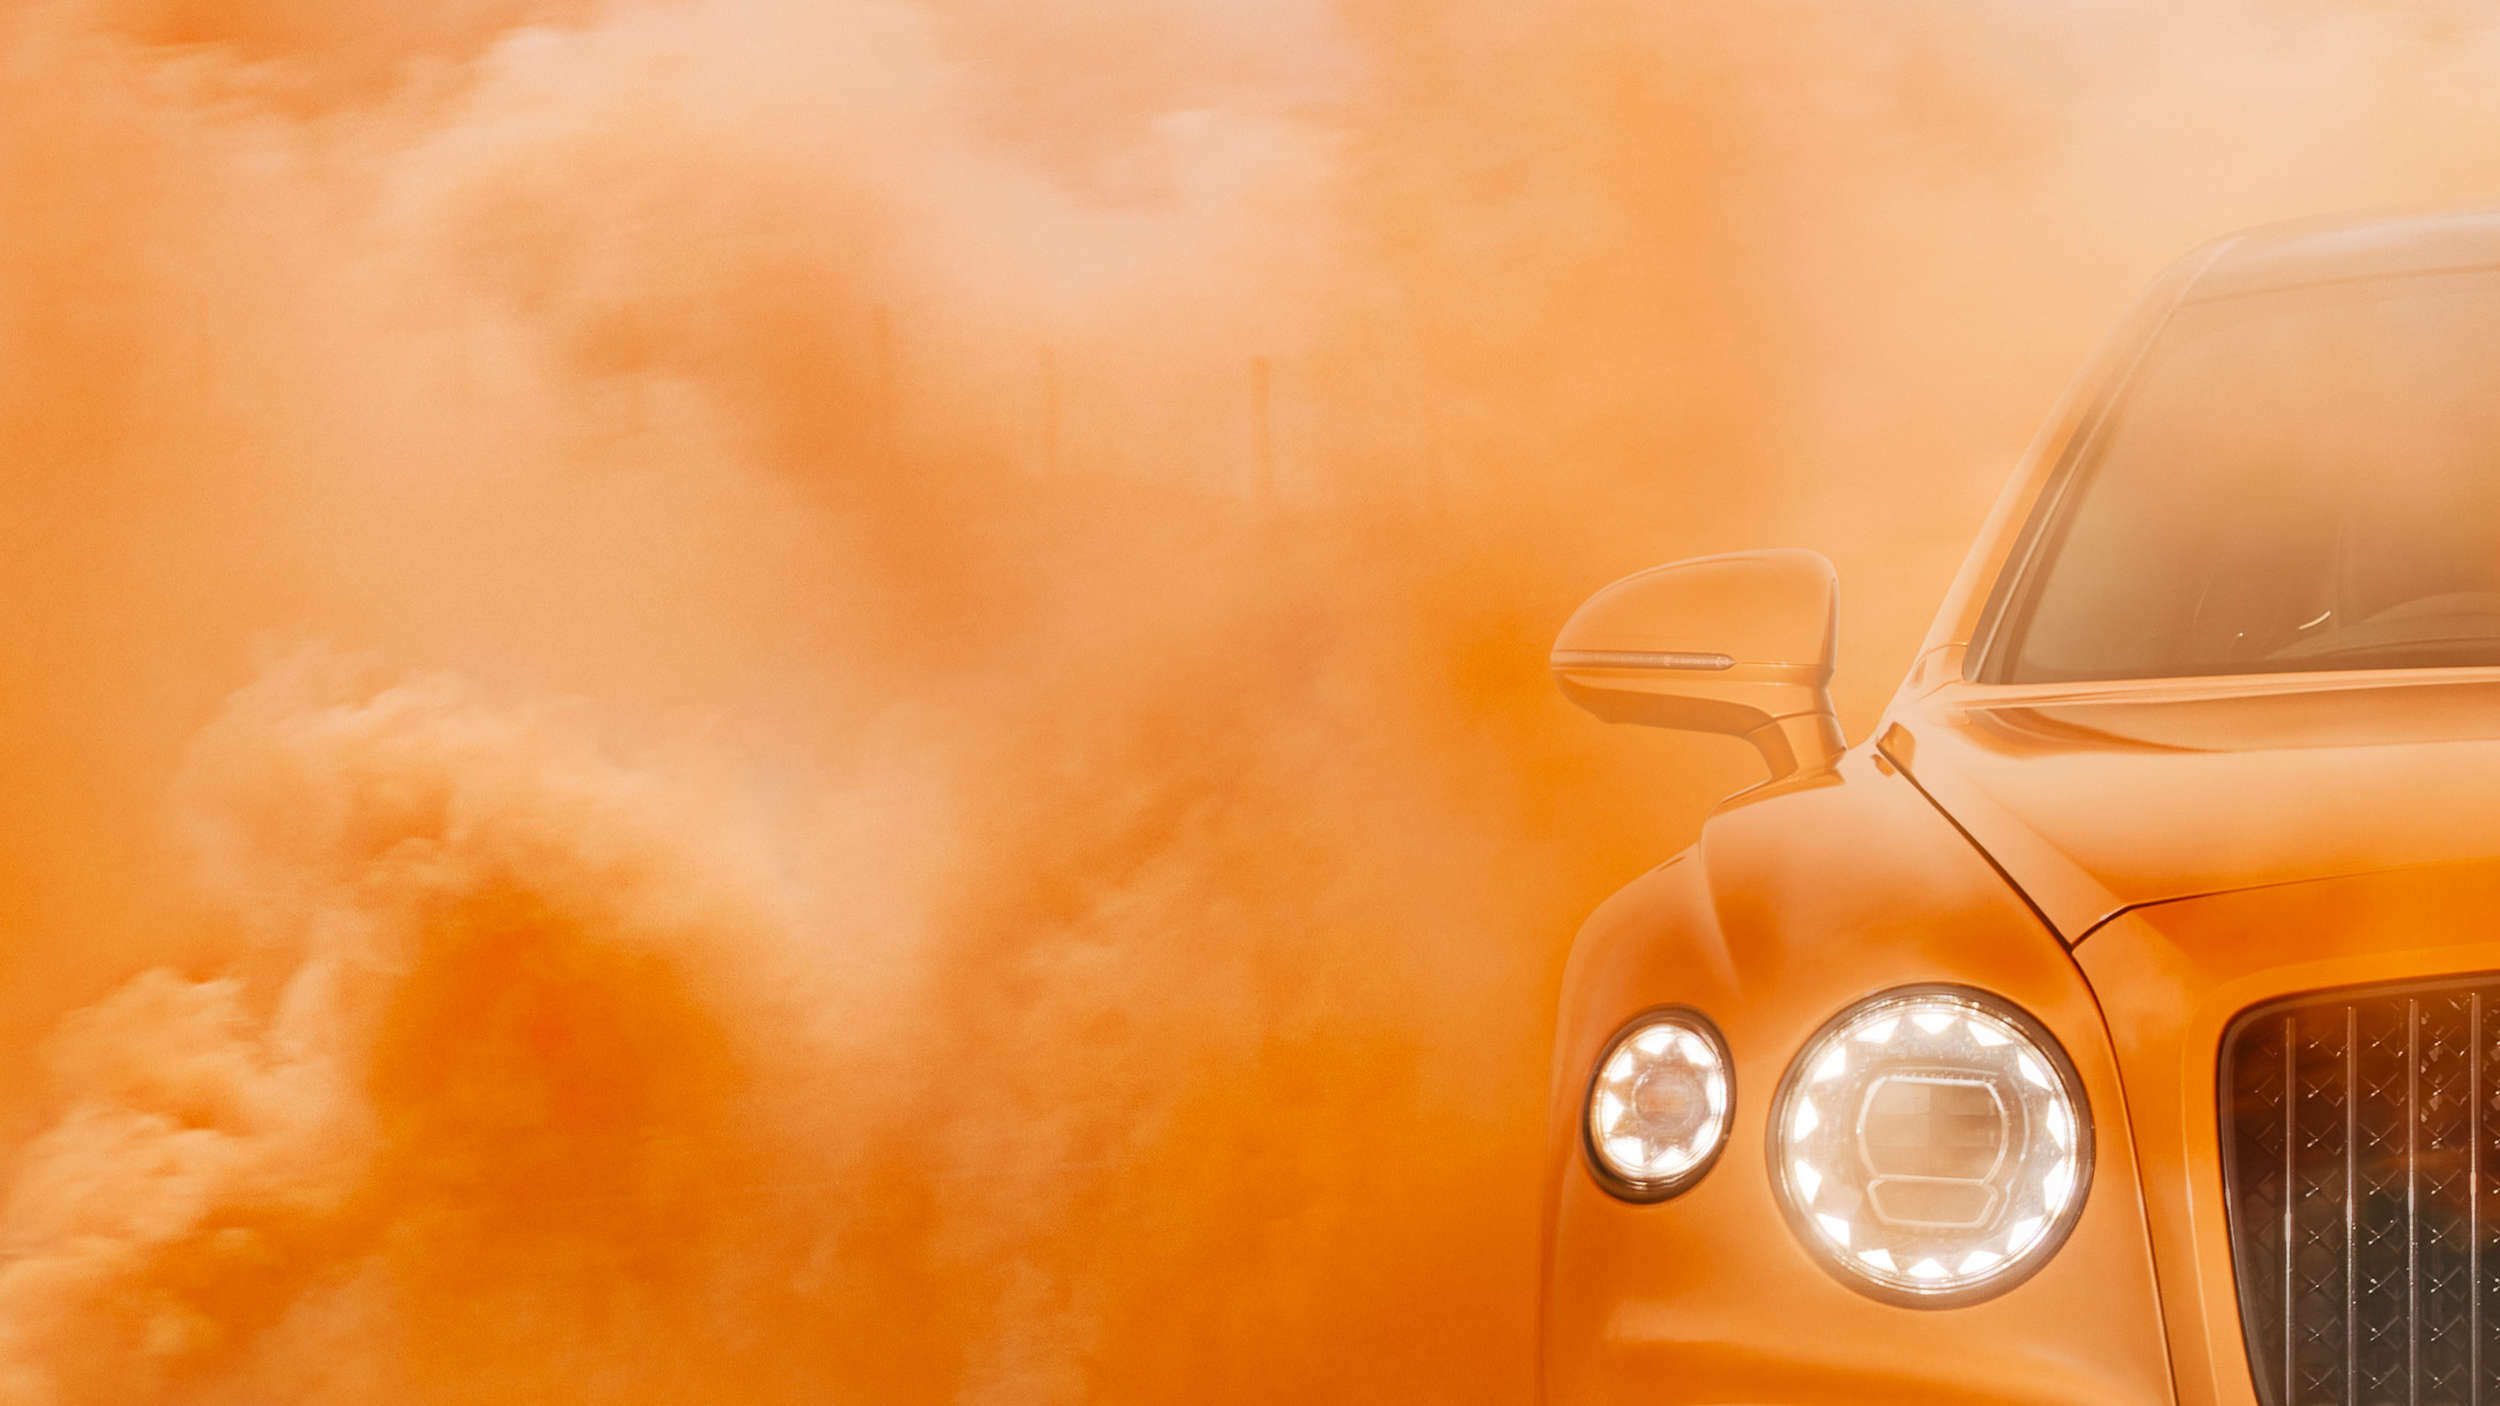 Bentley motor car in orange smoke